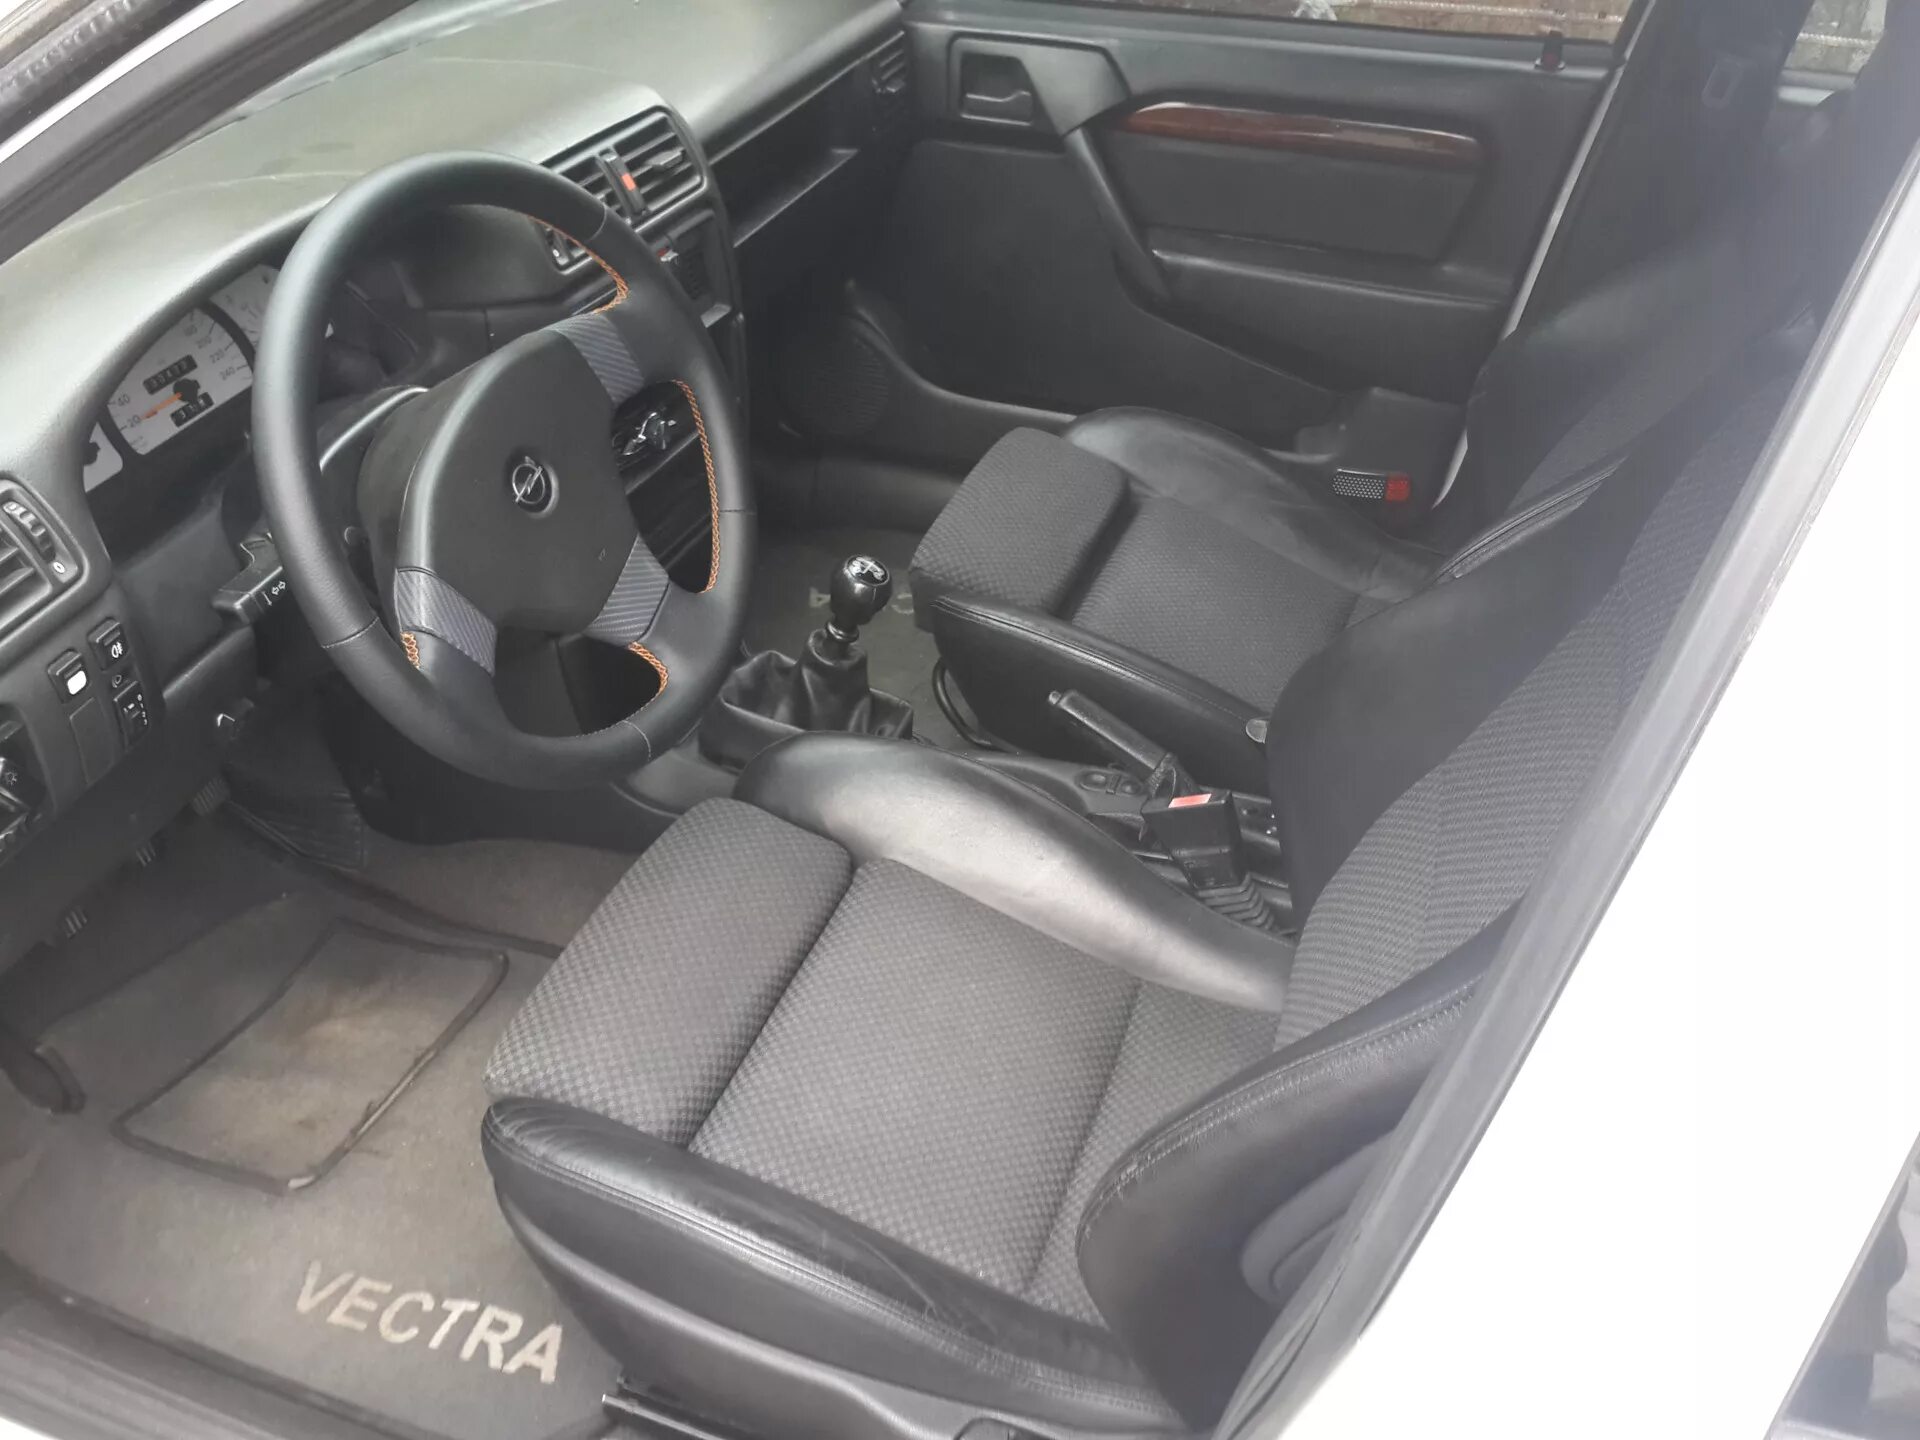 Opel Vectra b 2000 салон. Опель Вектра 2000 салон. Opel Vectra 2000 салон. Опель Вектра б 2000 салон.